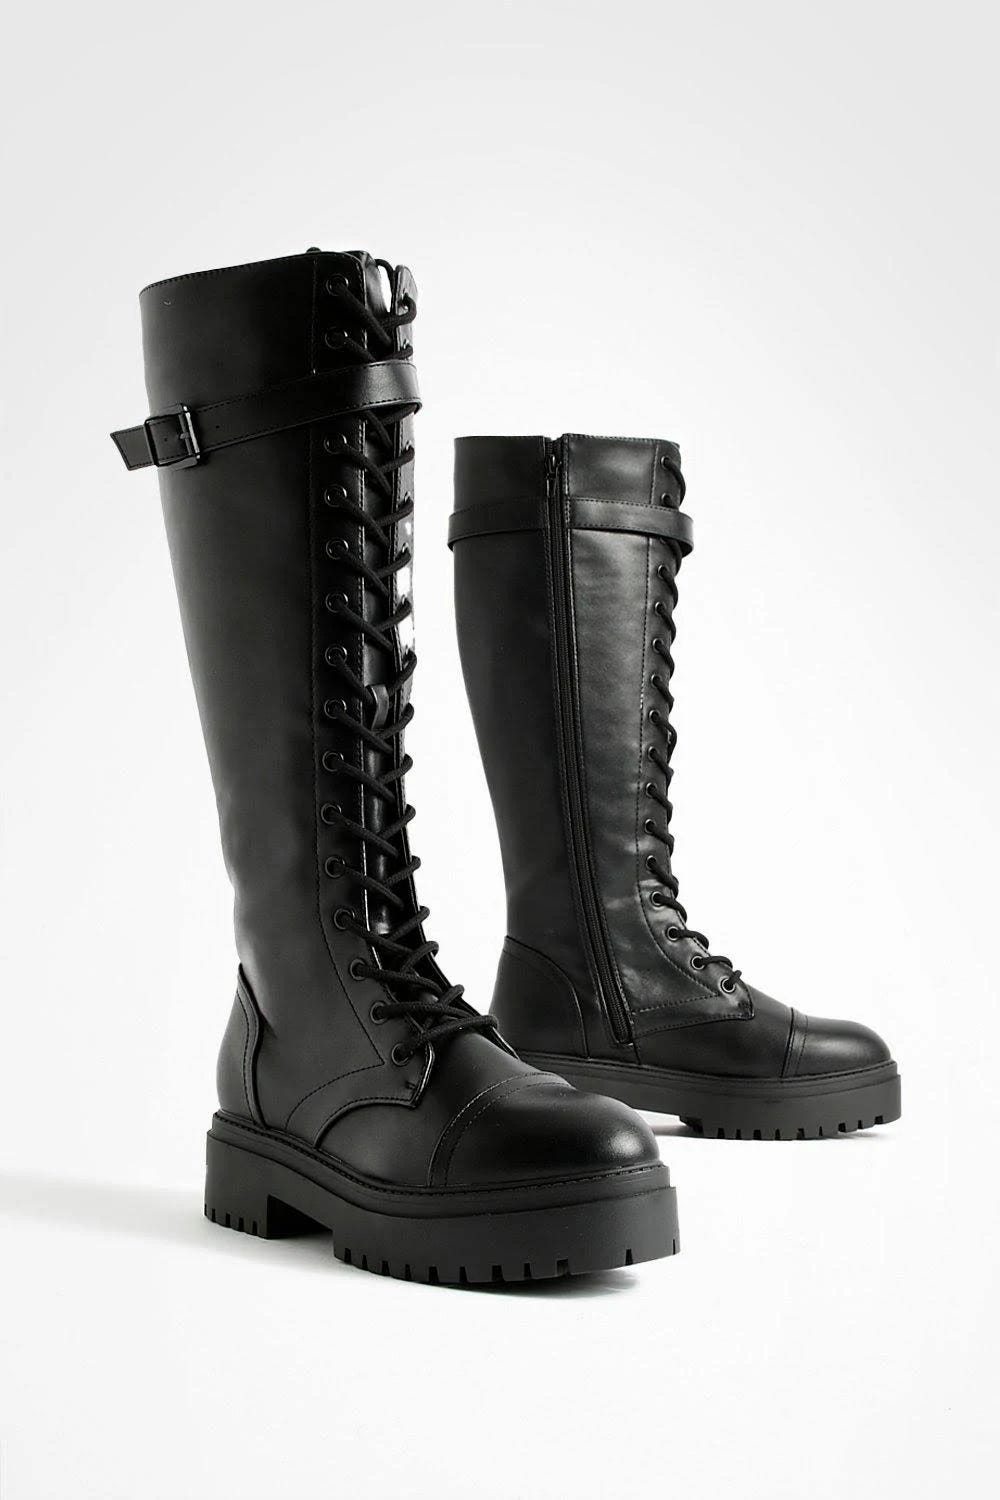 boohoo Black Side Buckle Knee High Boots | Image